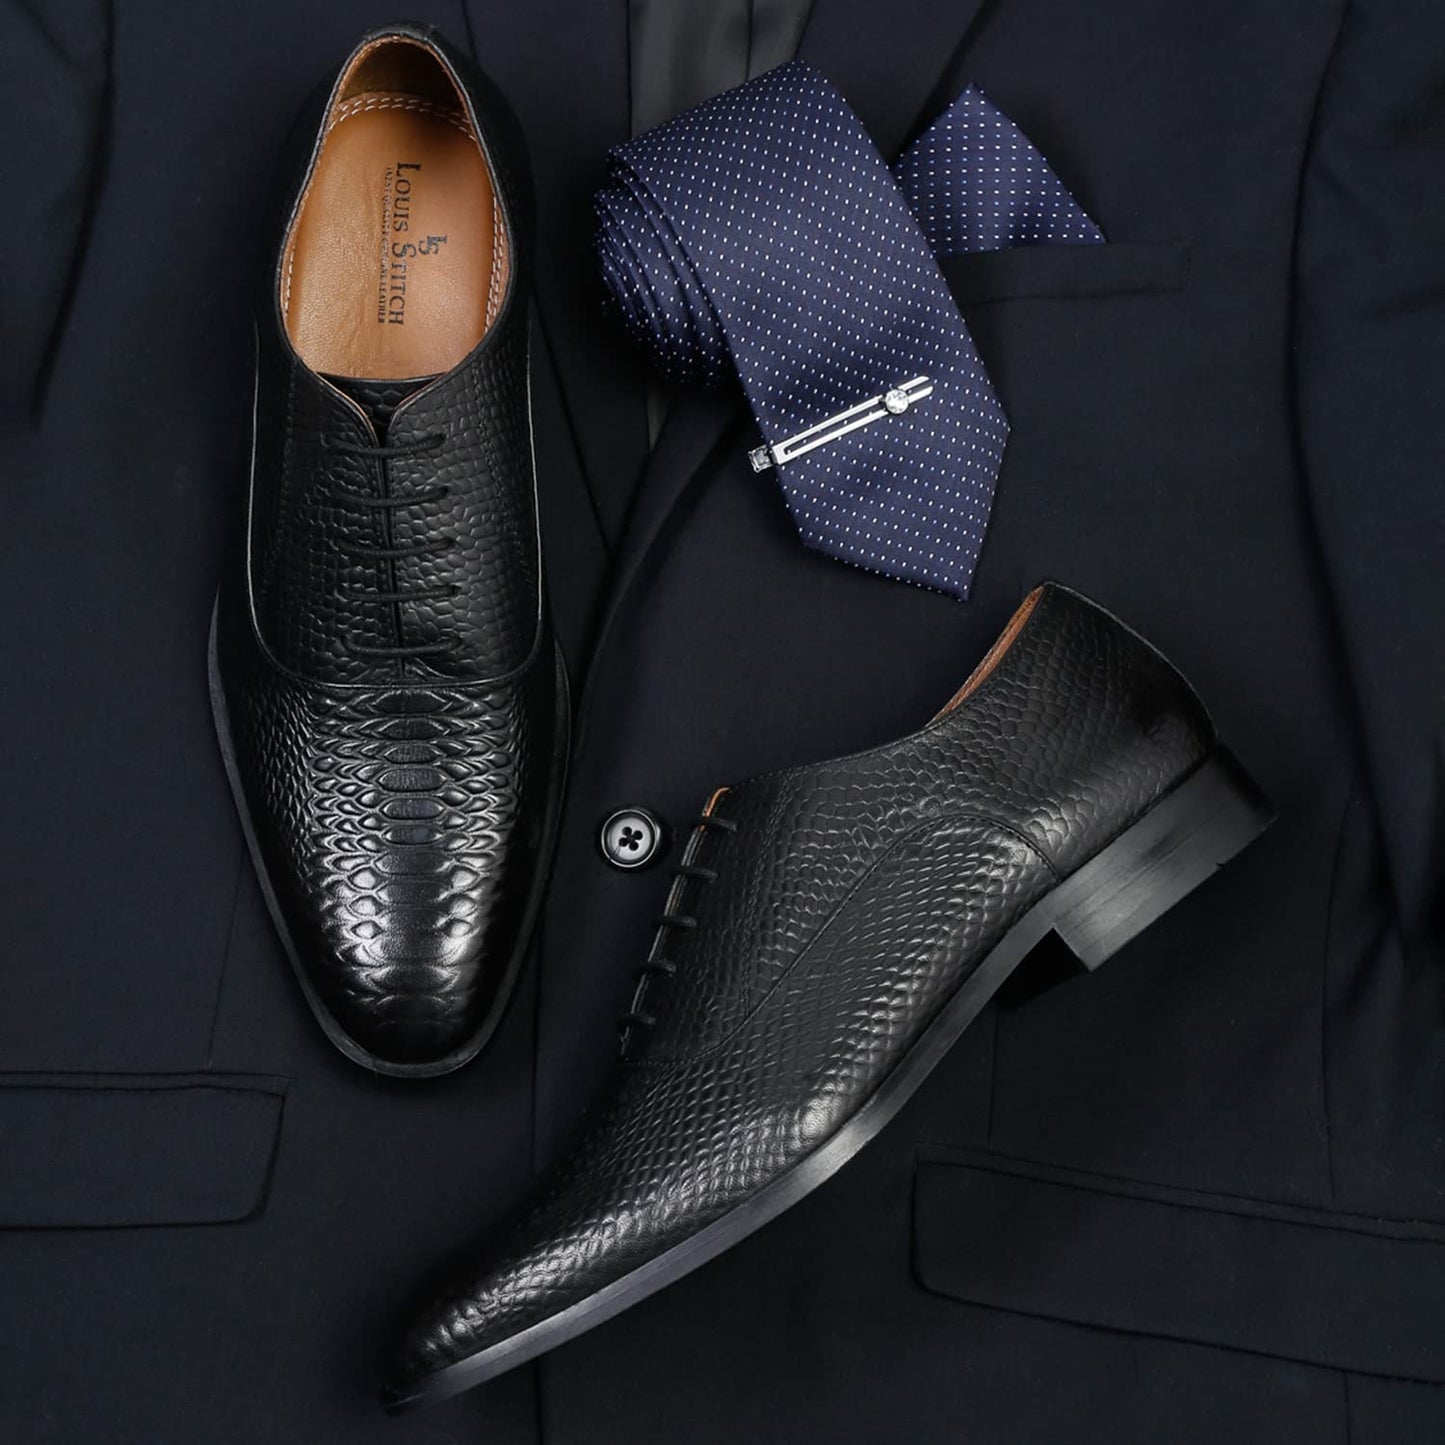 LOUIS STITCH Men's Style Devils Black Derby Shoes Handmade Formal Italian Leather Shoes for Men (EUSNJB) (Size- 8 UK)